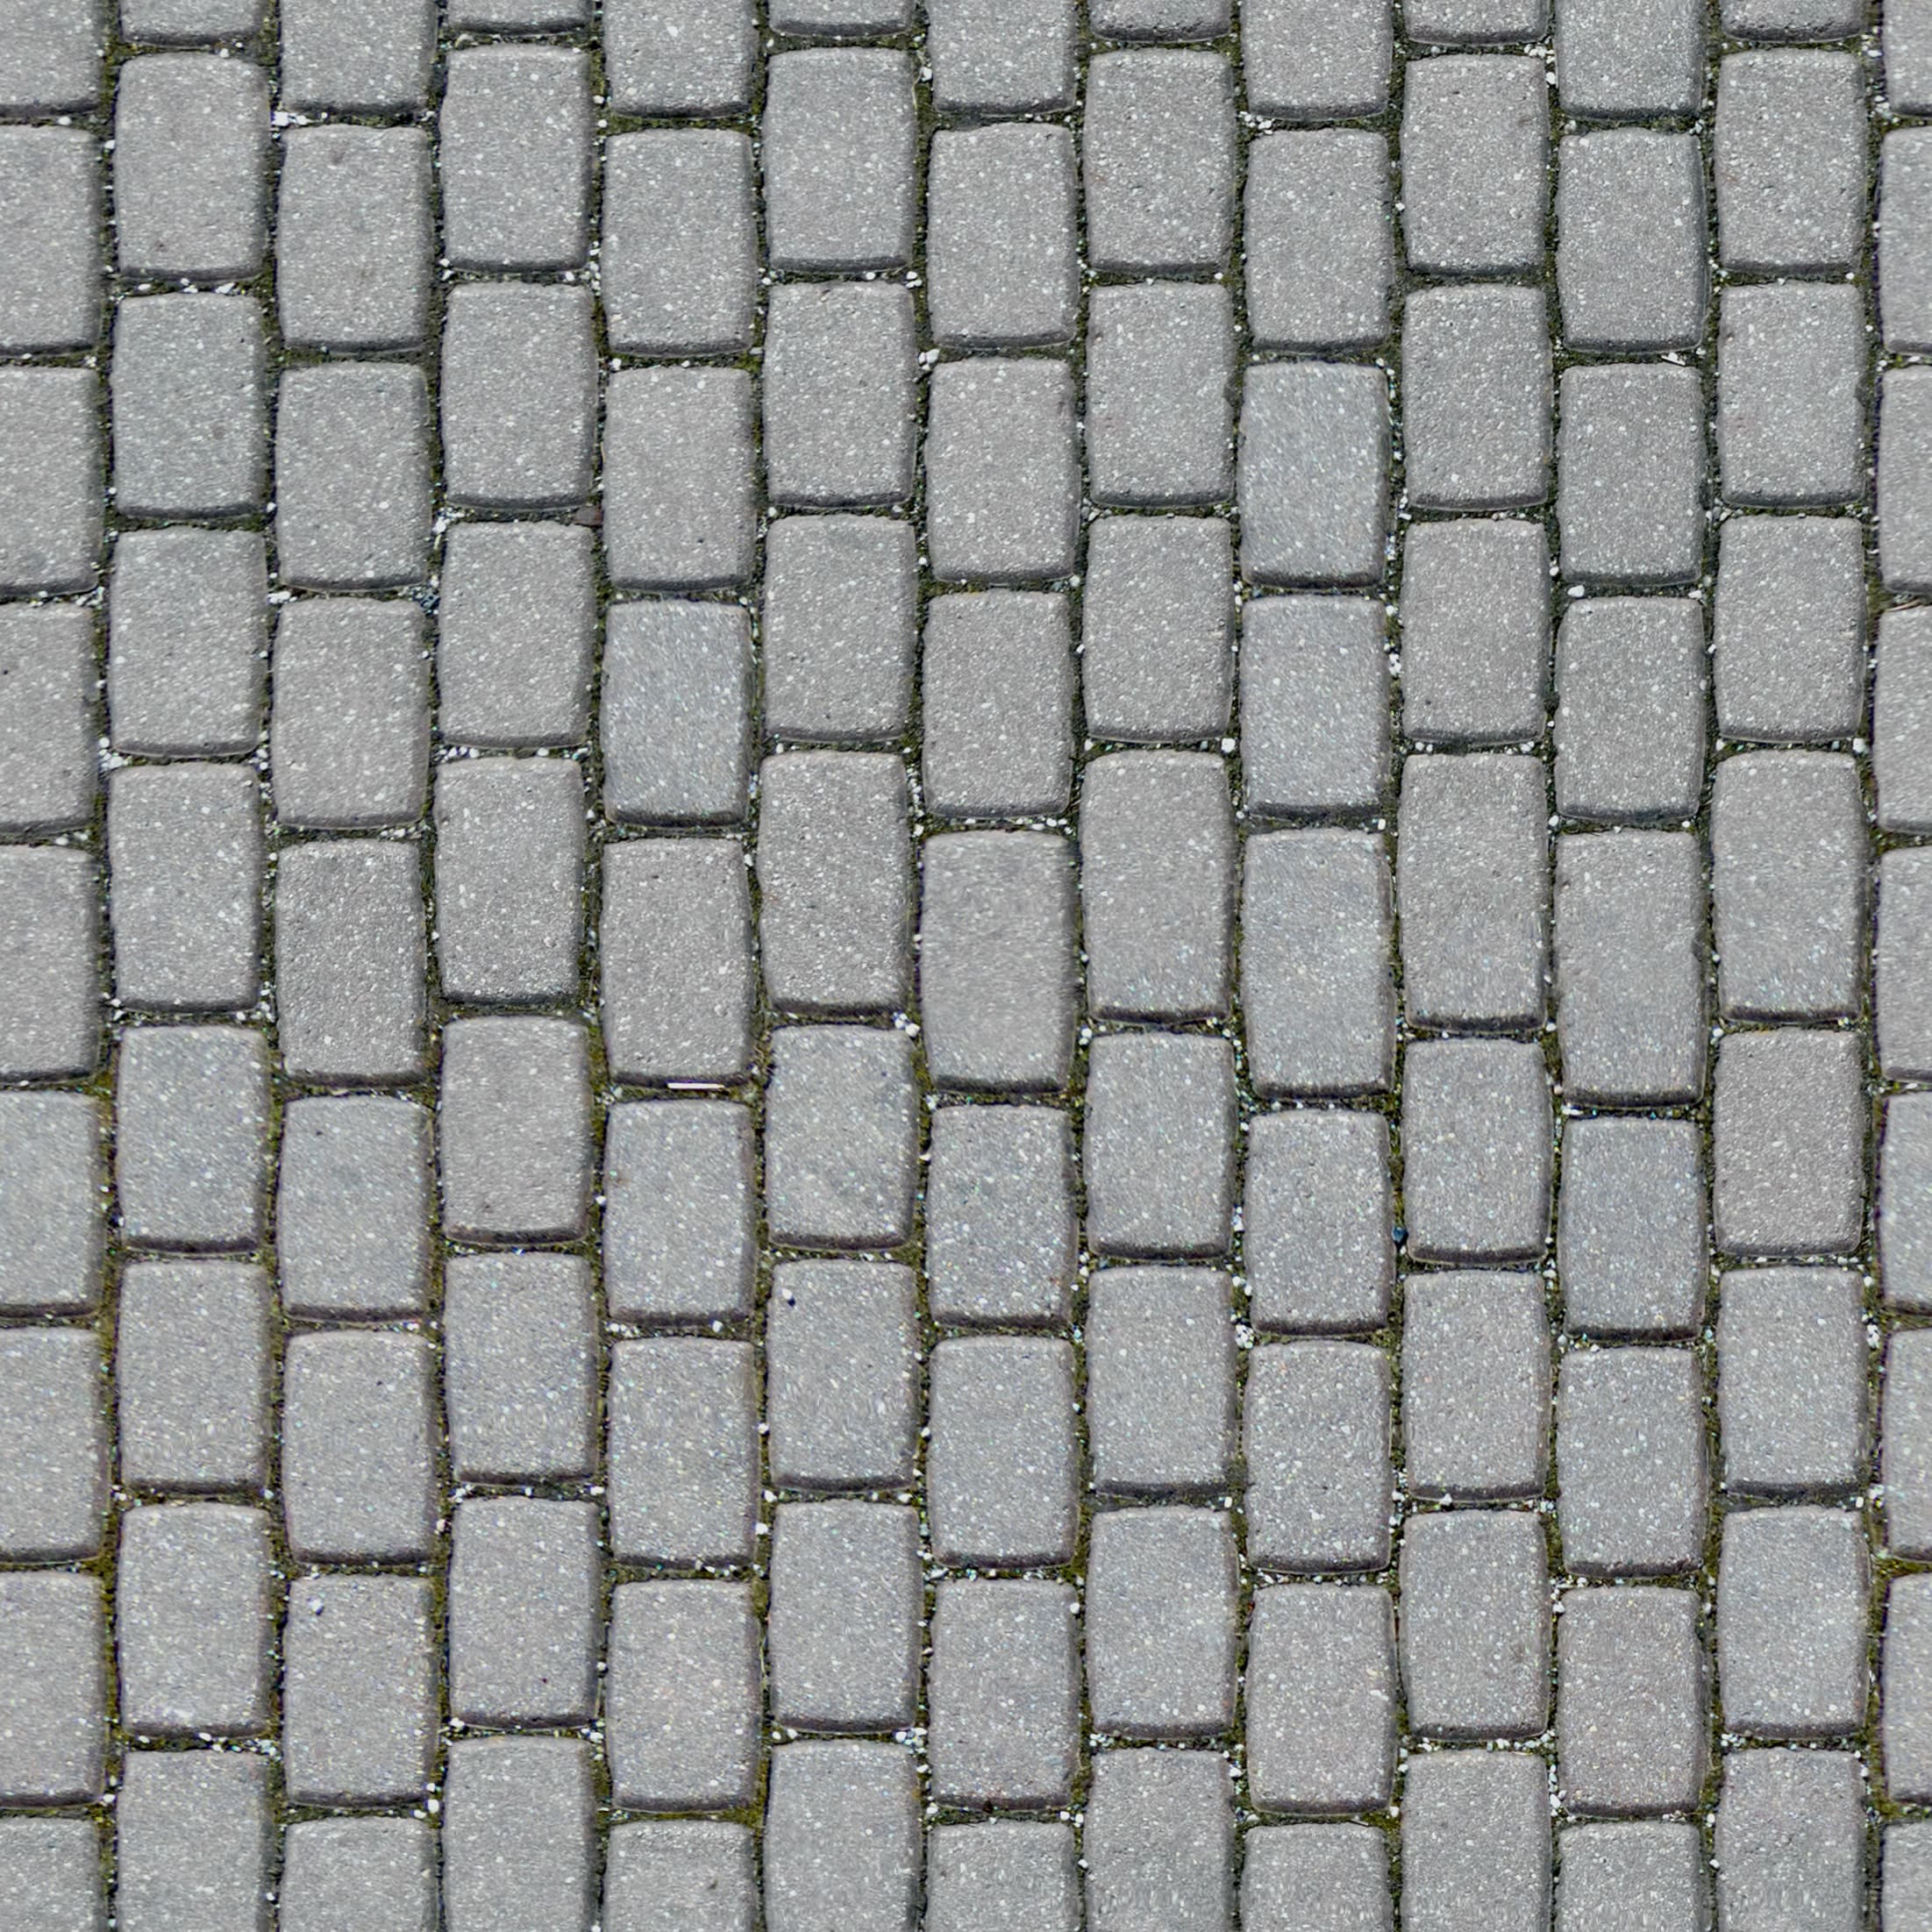 Seamless Sidewalk Texture